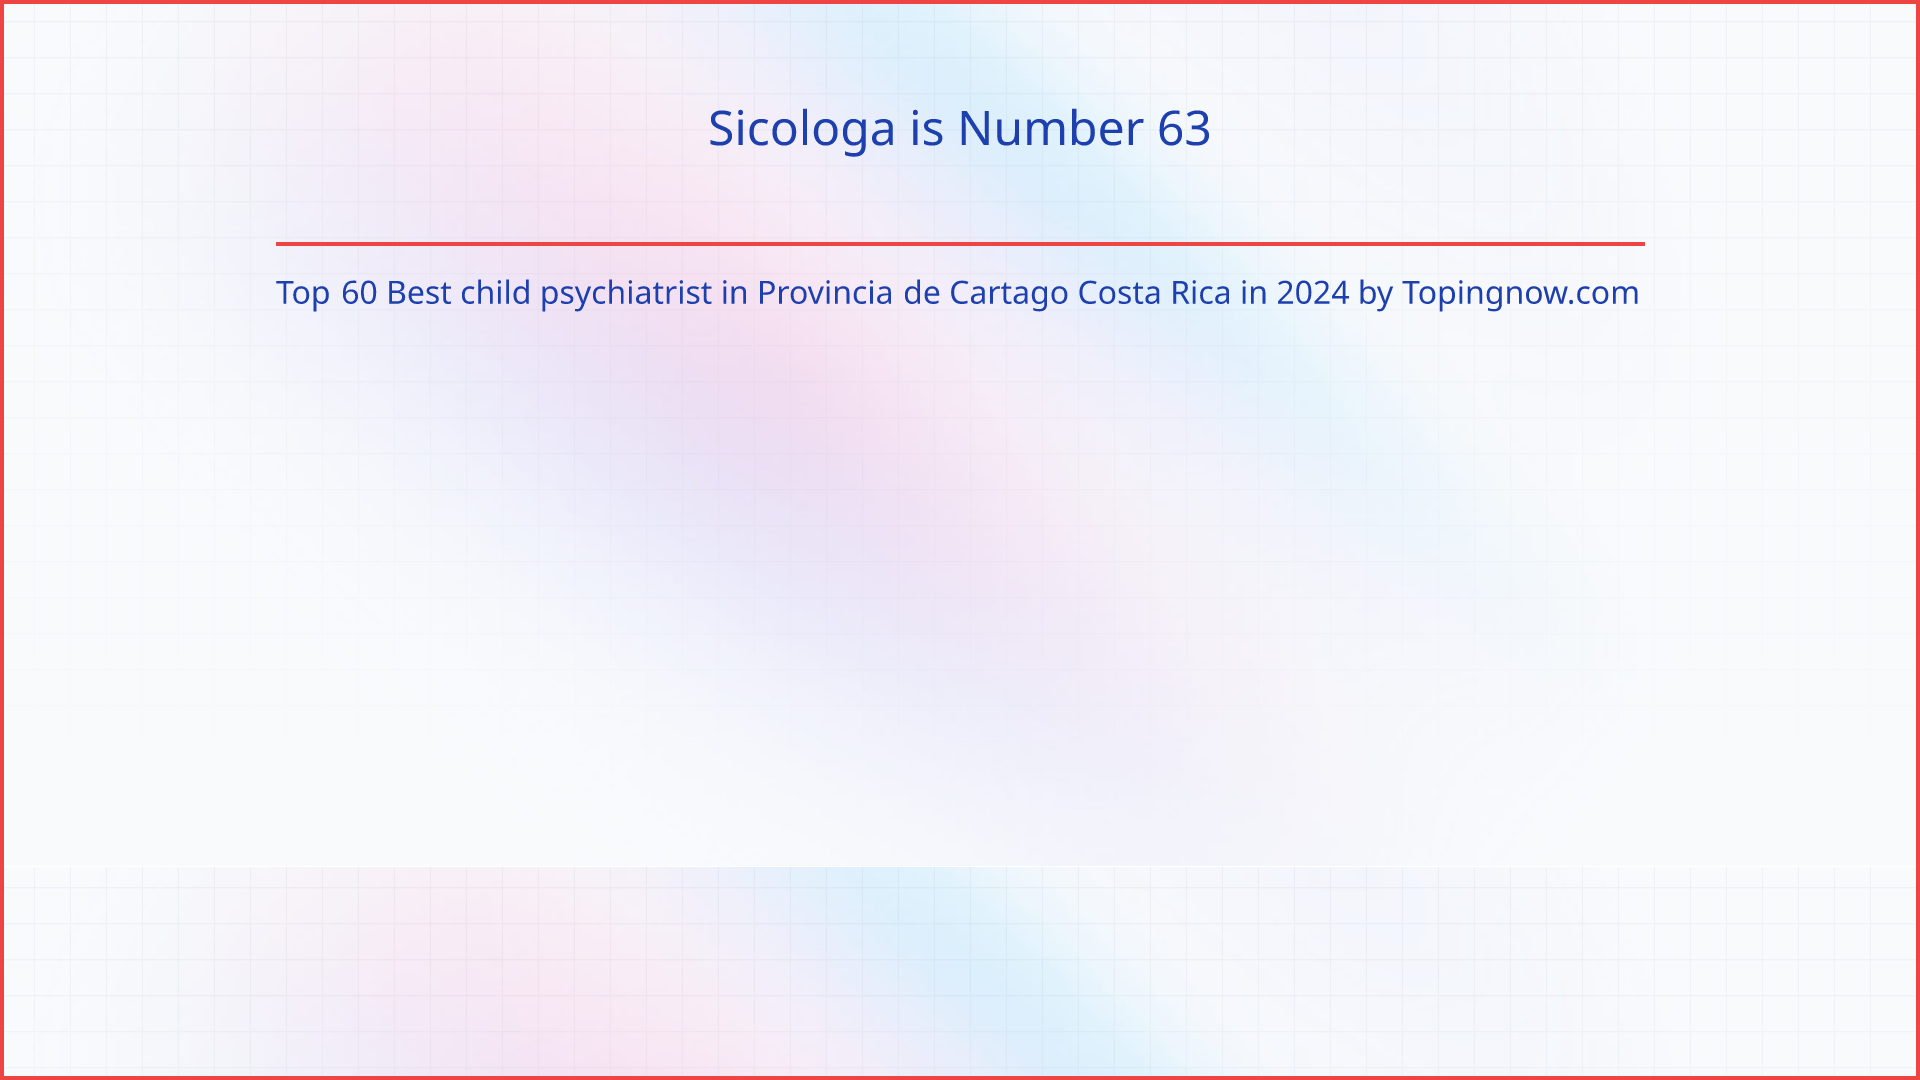 Sicologa: Top 60 Best child psychiatrist in Provincia de Cartago Costa Rica in 2024